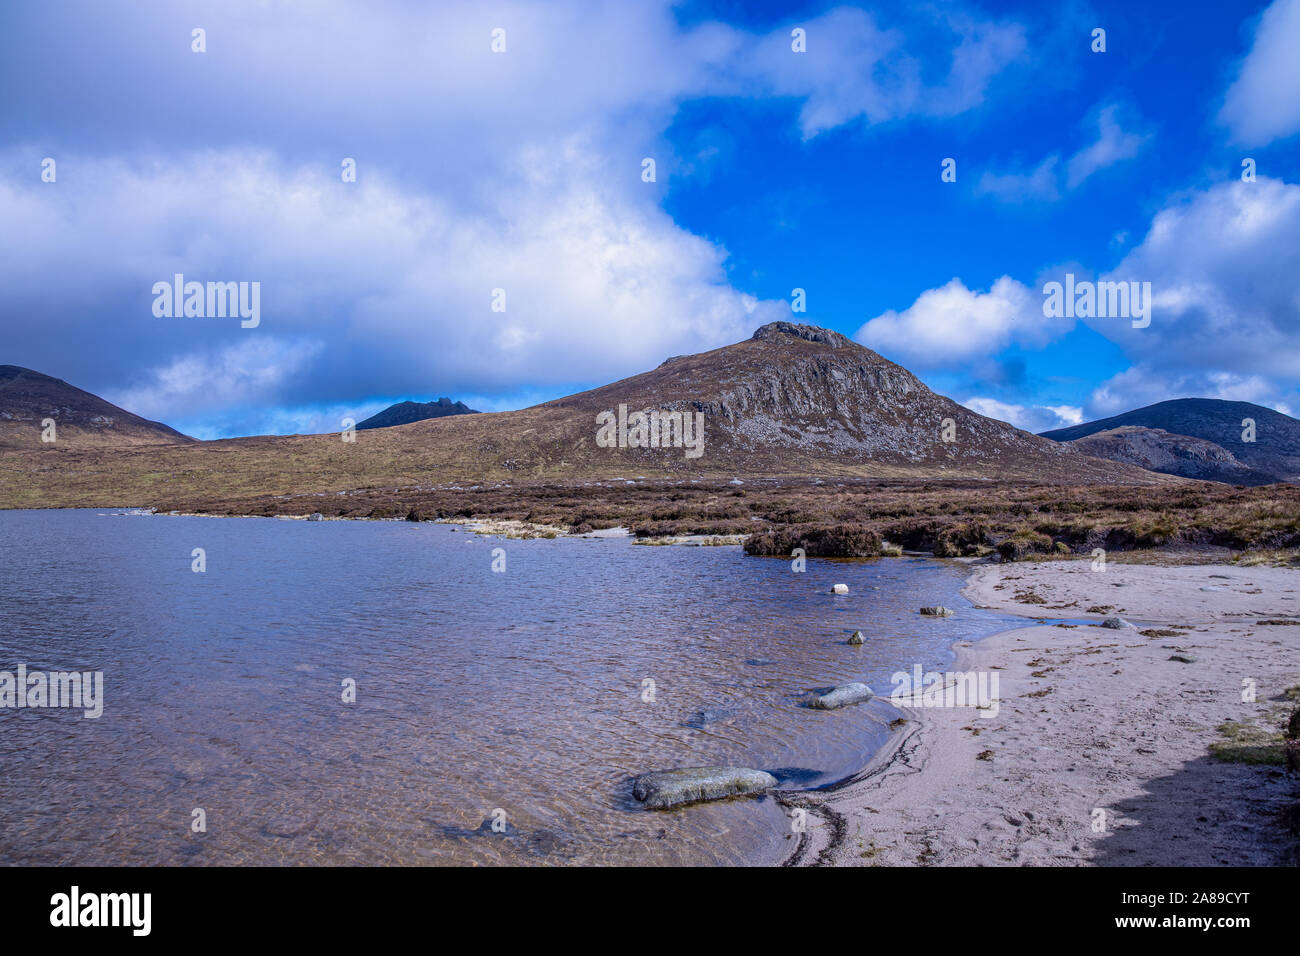 Doan mountain, The Mourne mountains, County Down, Northern Ireland Stock Photo